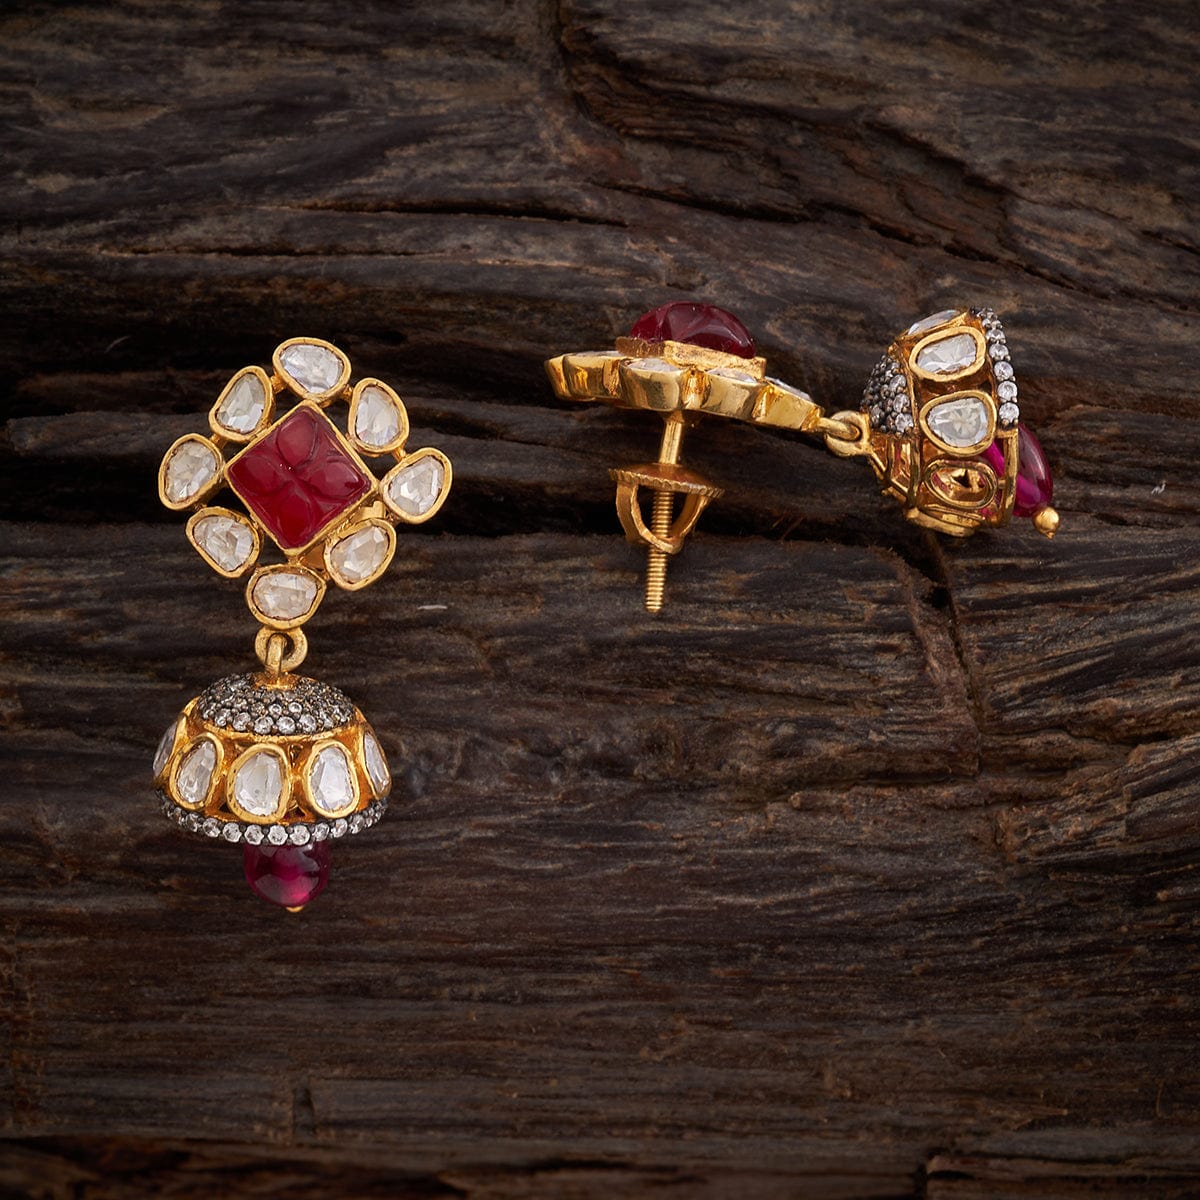 Details more than 273 kundan silver earrings